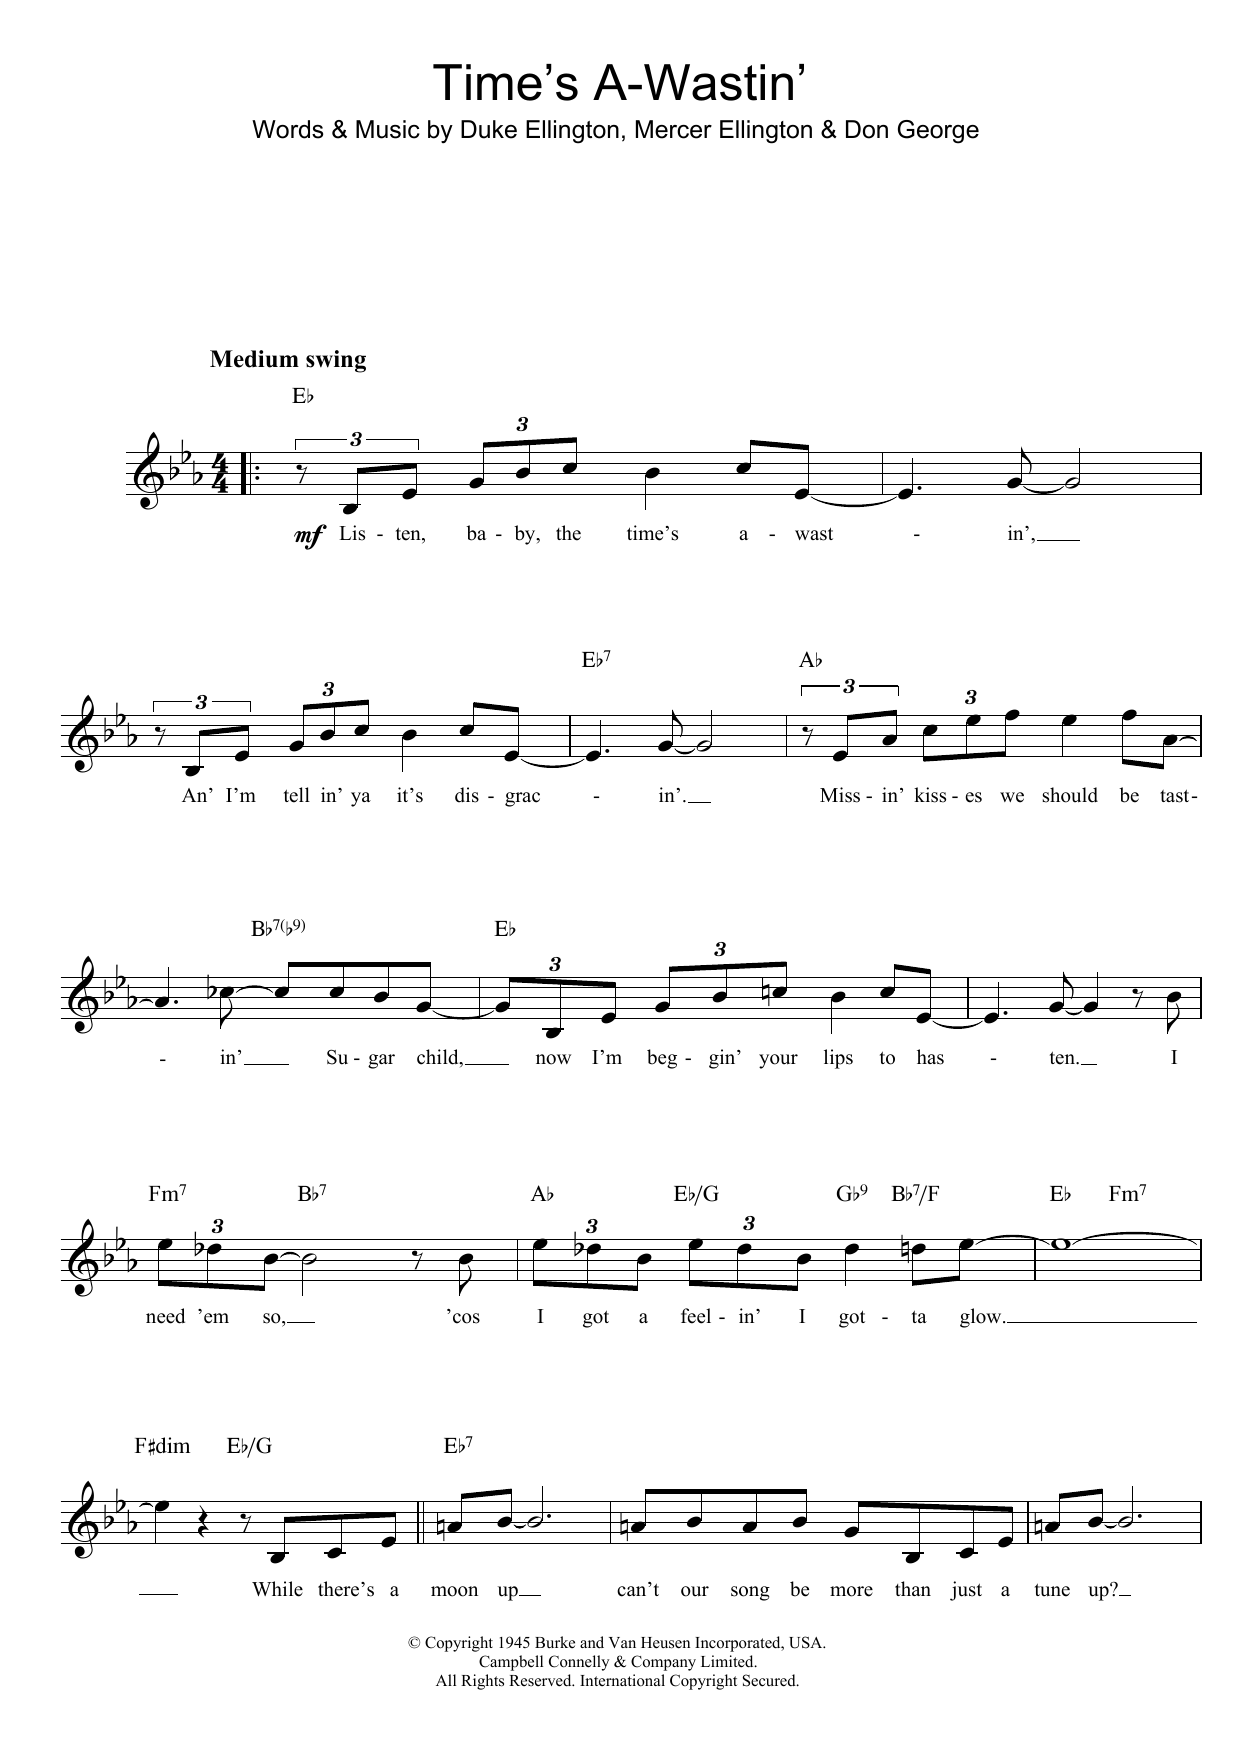 Duke Ellington Time's A Wastin' Sheet Music Notes & Chords for Melody Line, Lyrics & Chords - Download or Print PDF